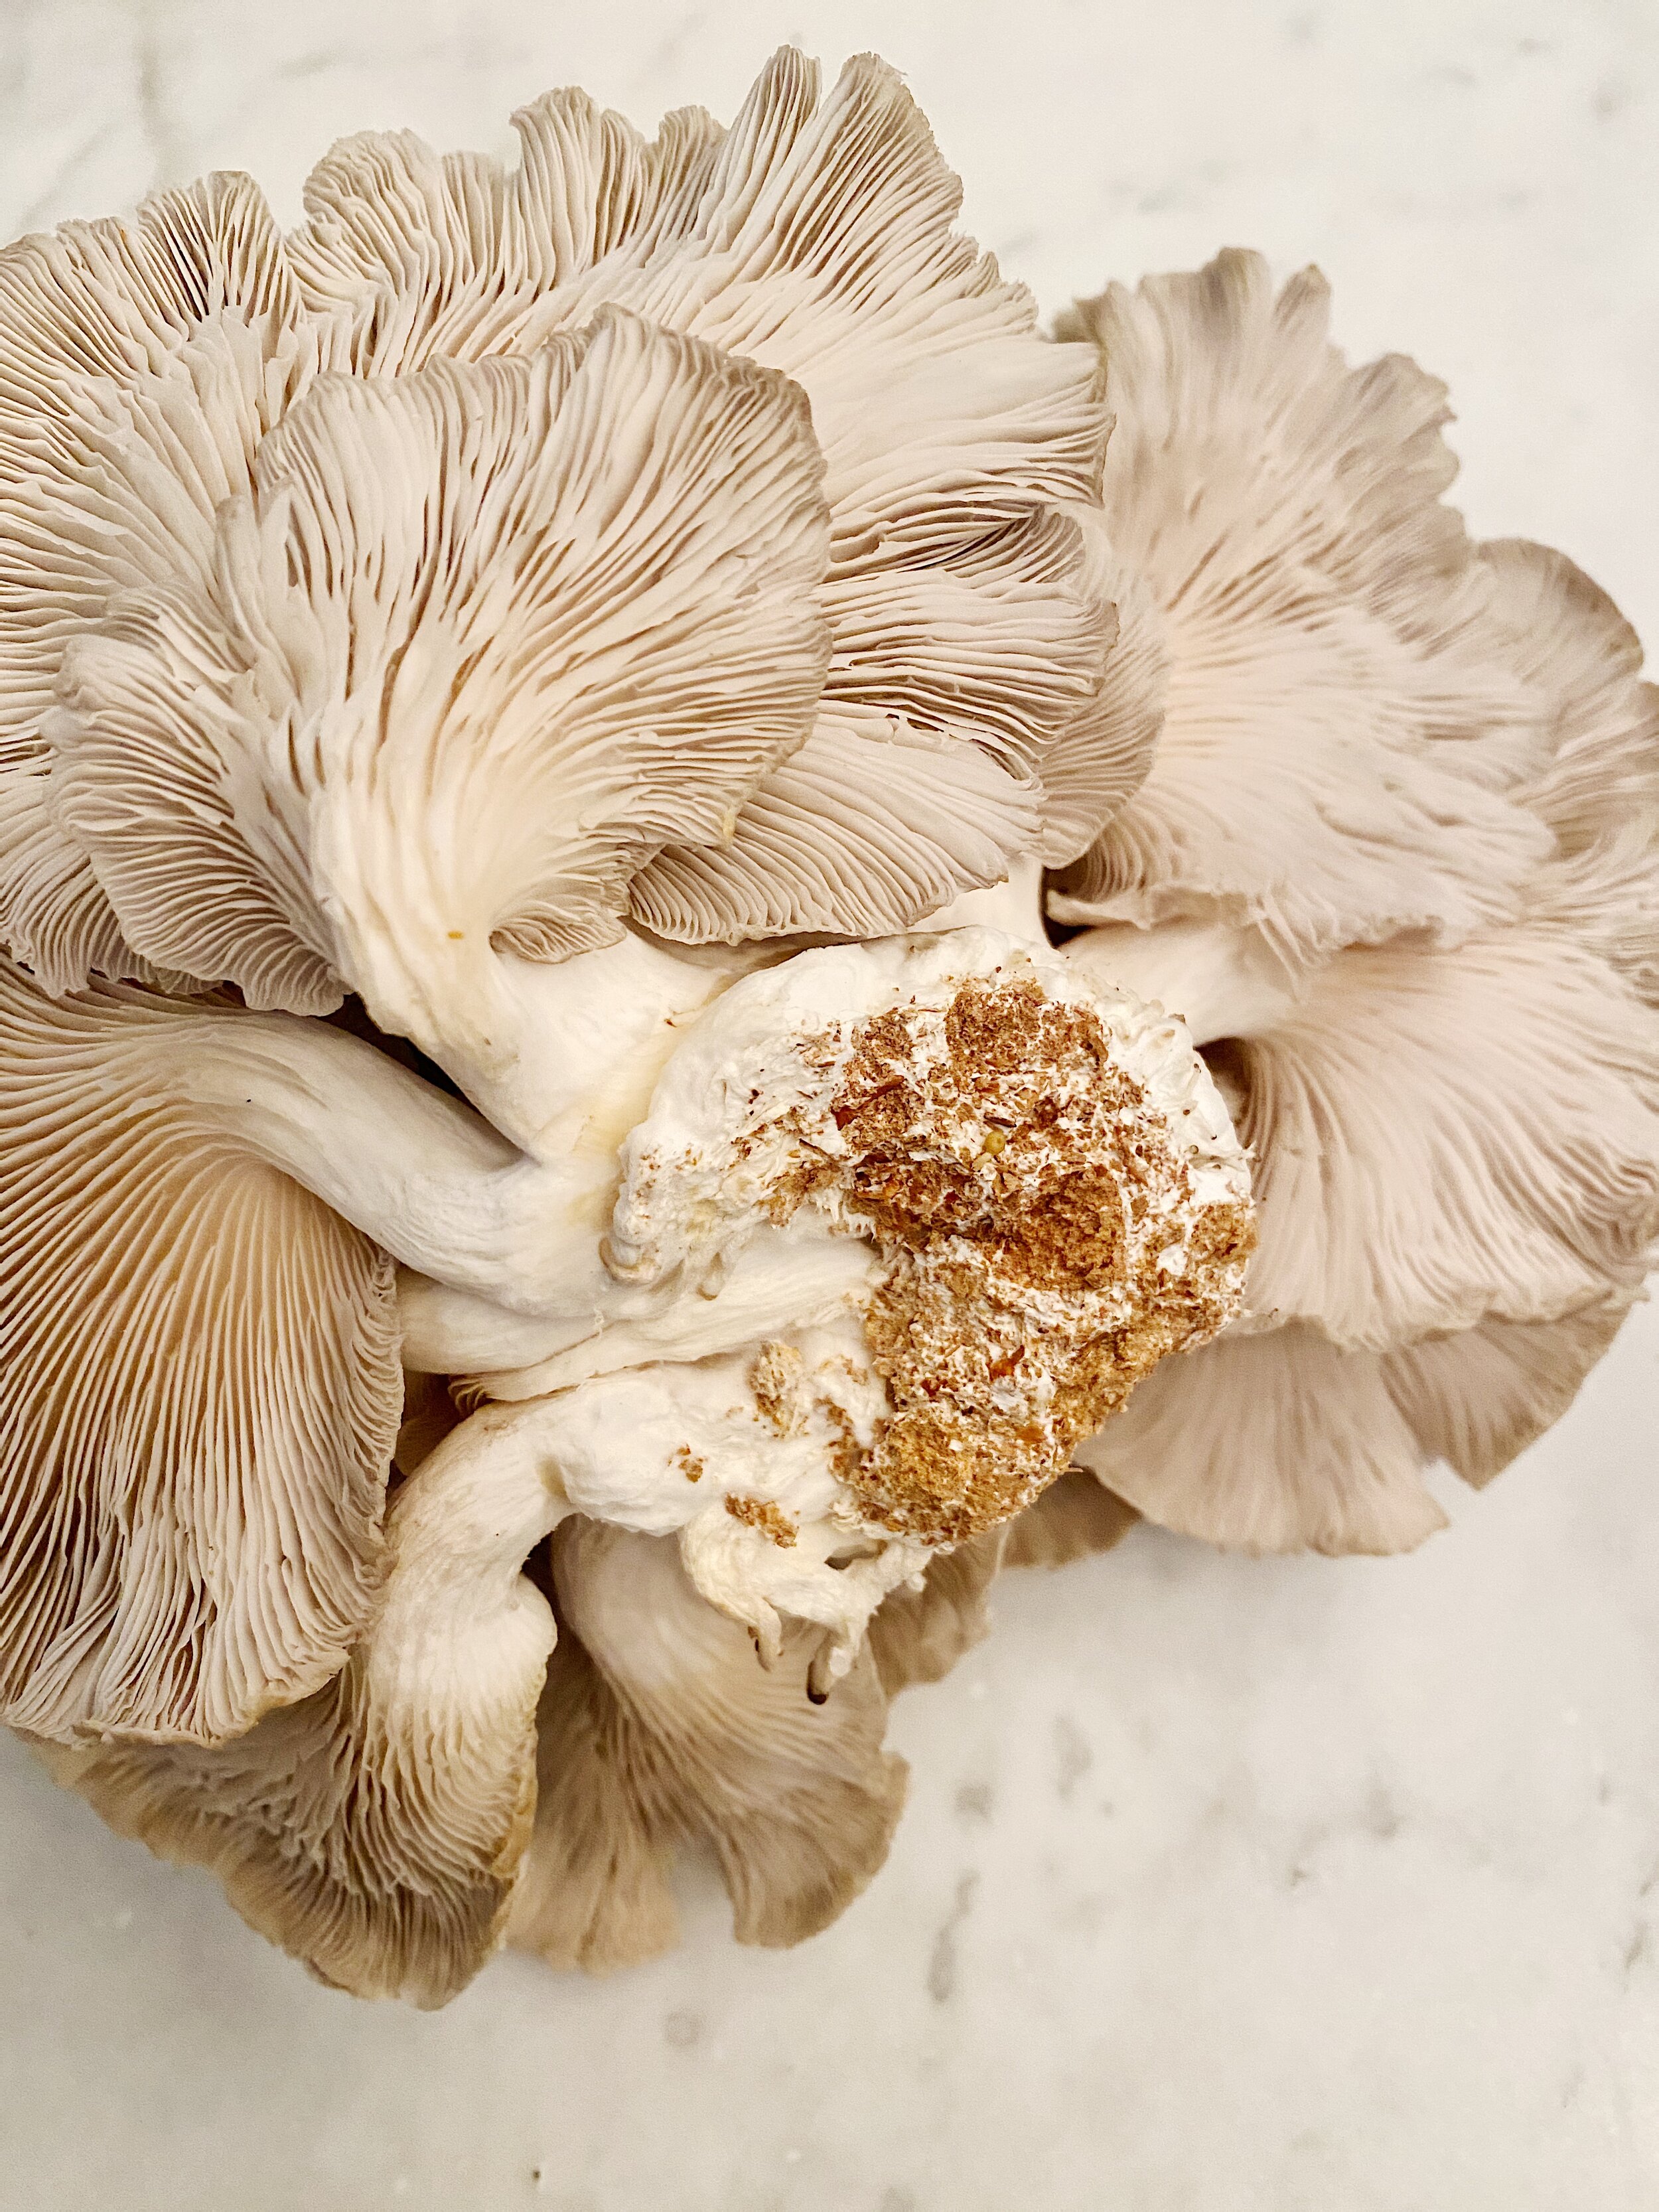 Underside of a Brown Oyster Mushroom